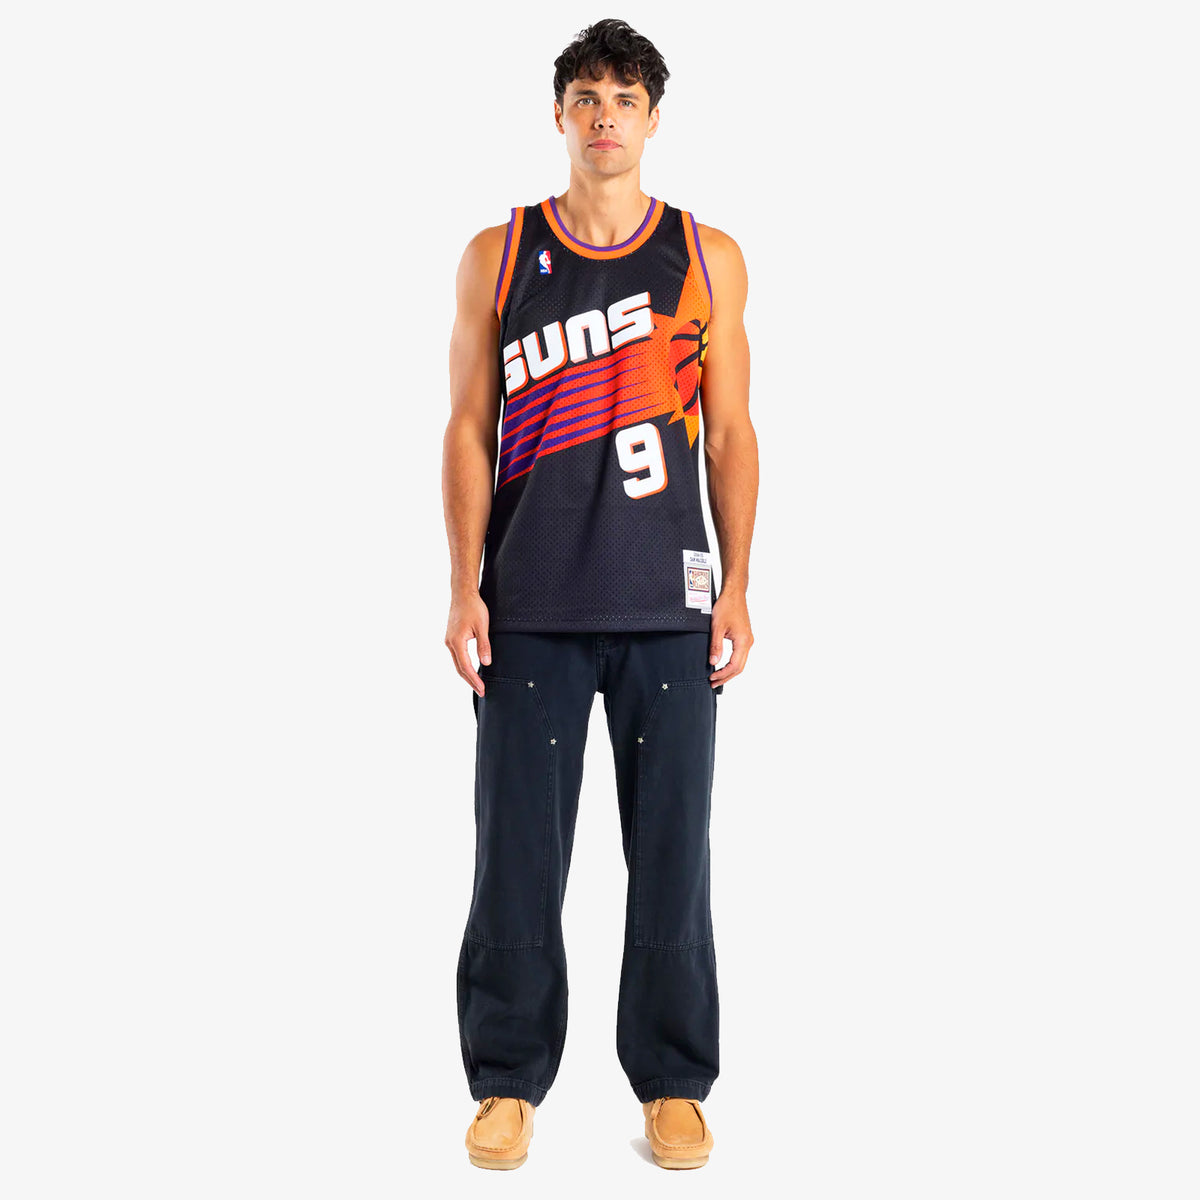 Dan Majerle Phoenix Suns 94-95 HWC Swingman Jersey - Black